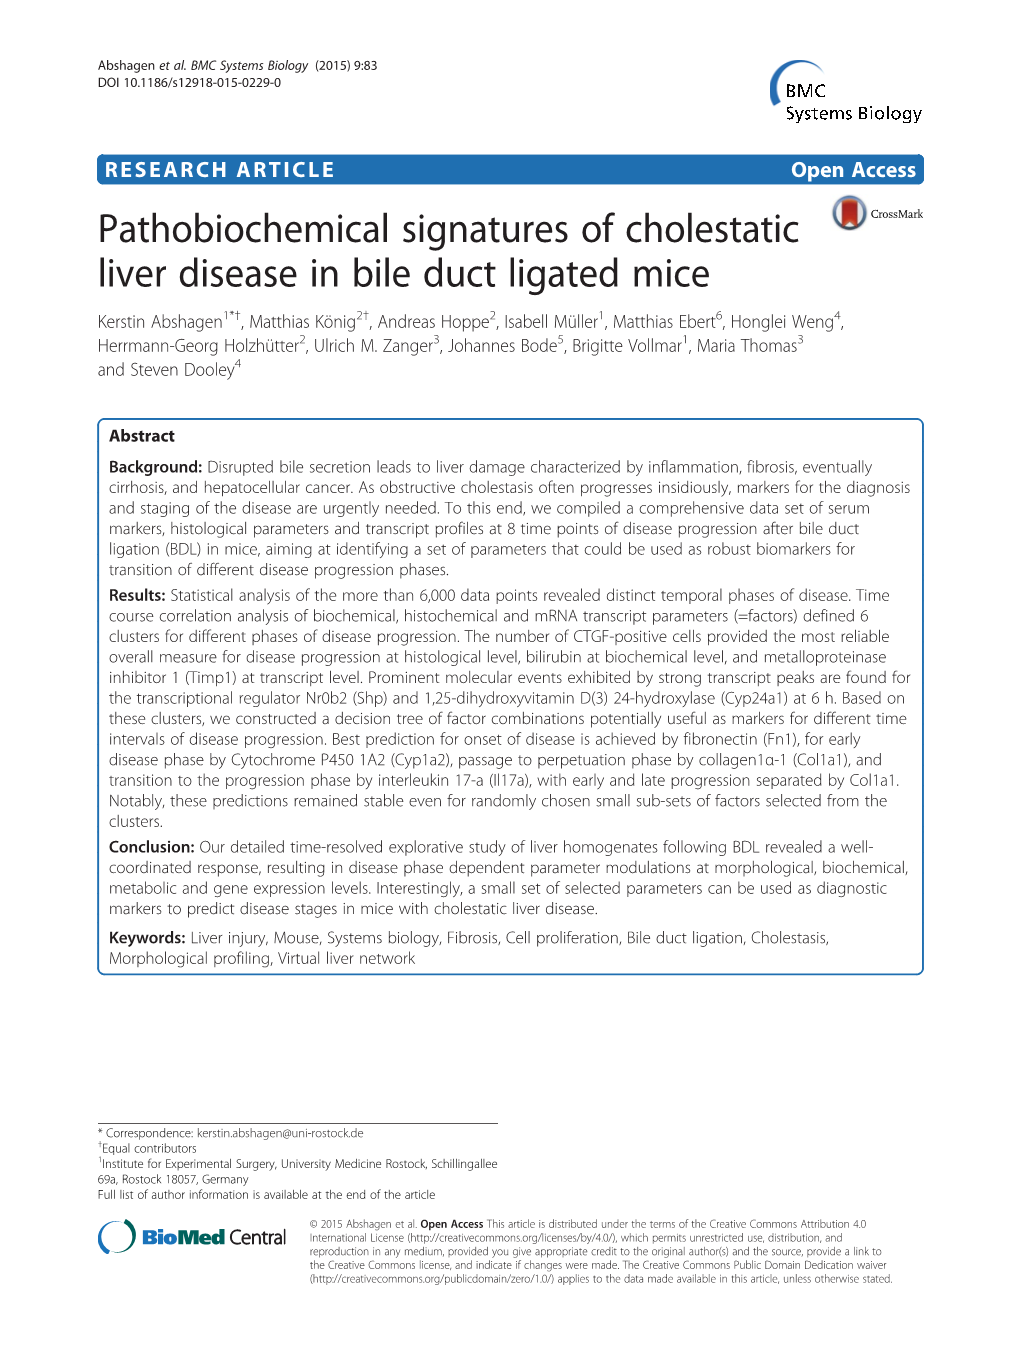 Pathobiochemical Signatures of Cholestatic Liver Disease in Bile Duct